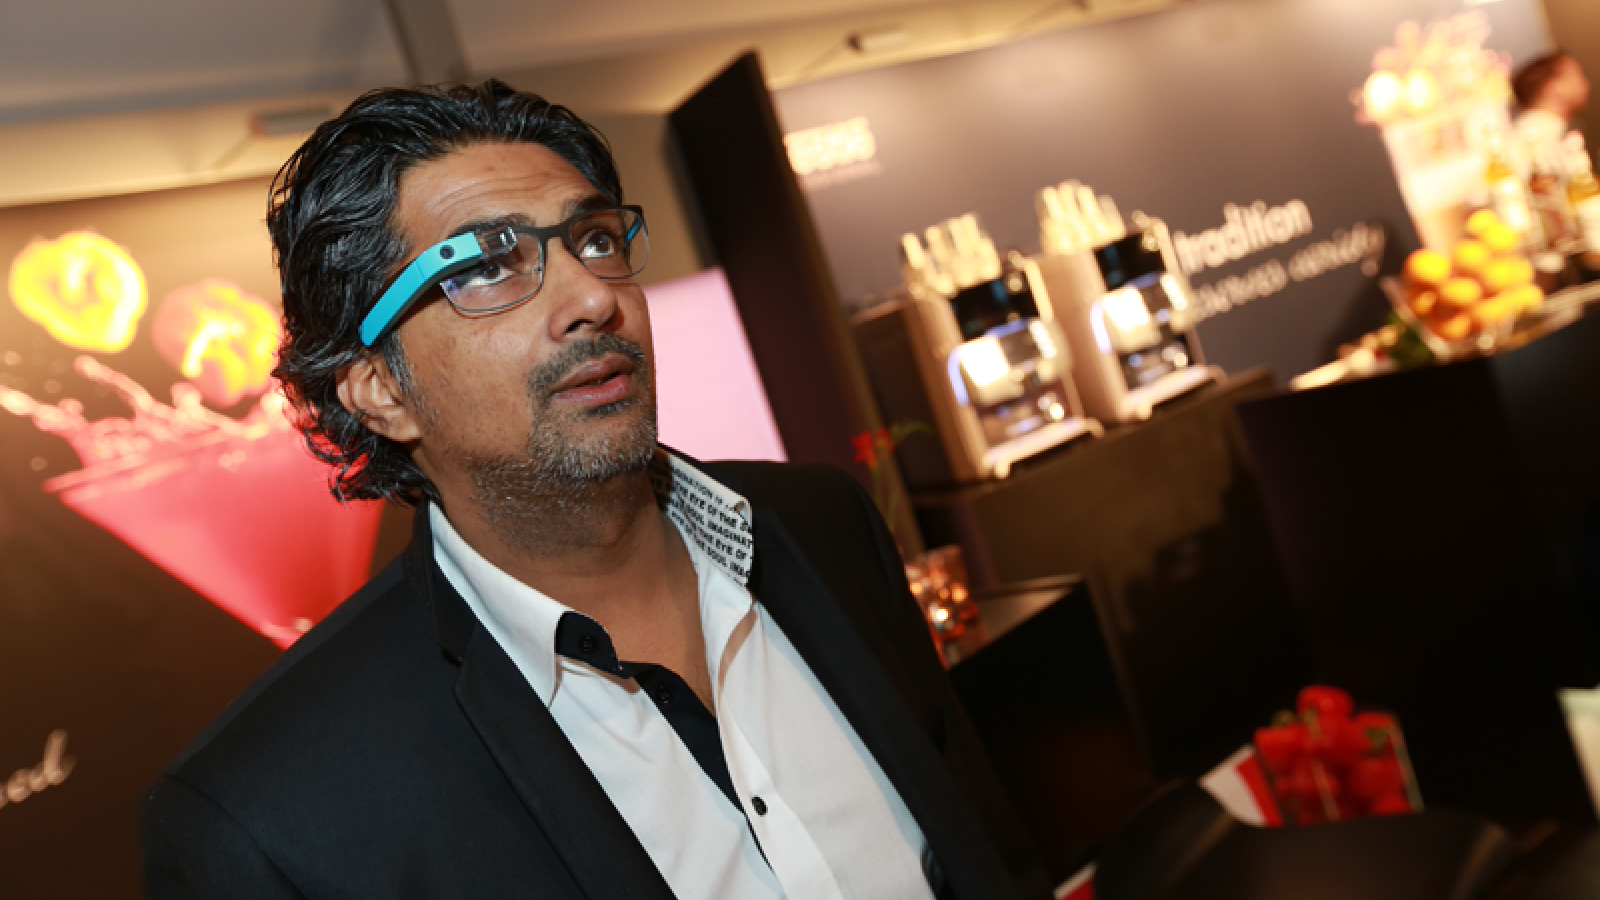 Vervangt Google Glass de chef?